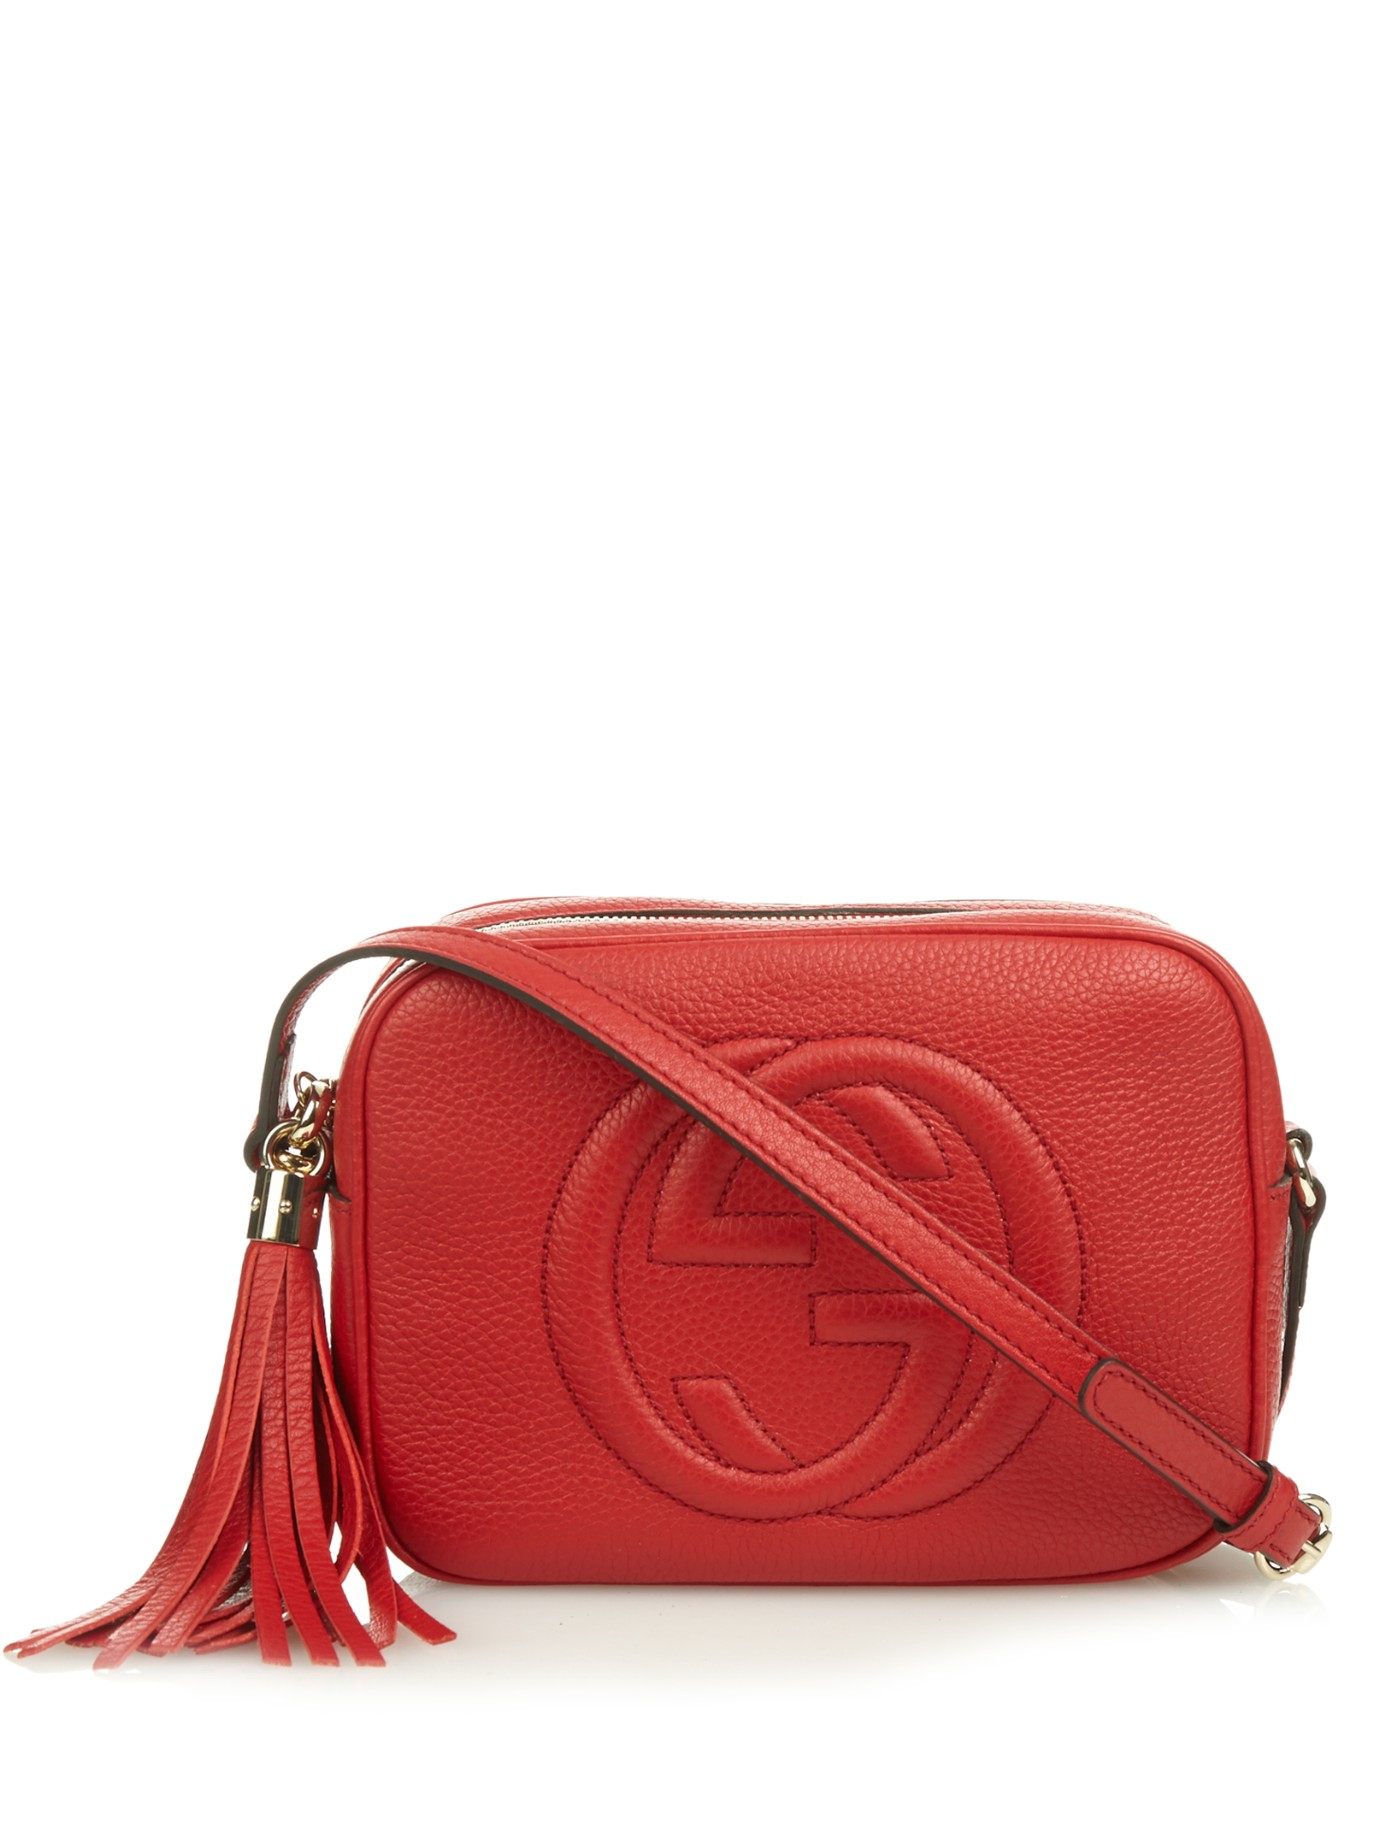 Gucci Handbags Cross Body Bags | semashow.com